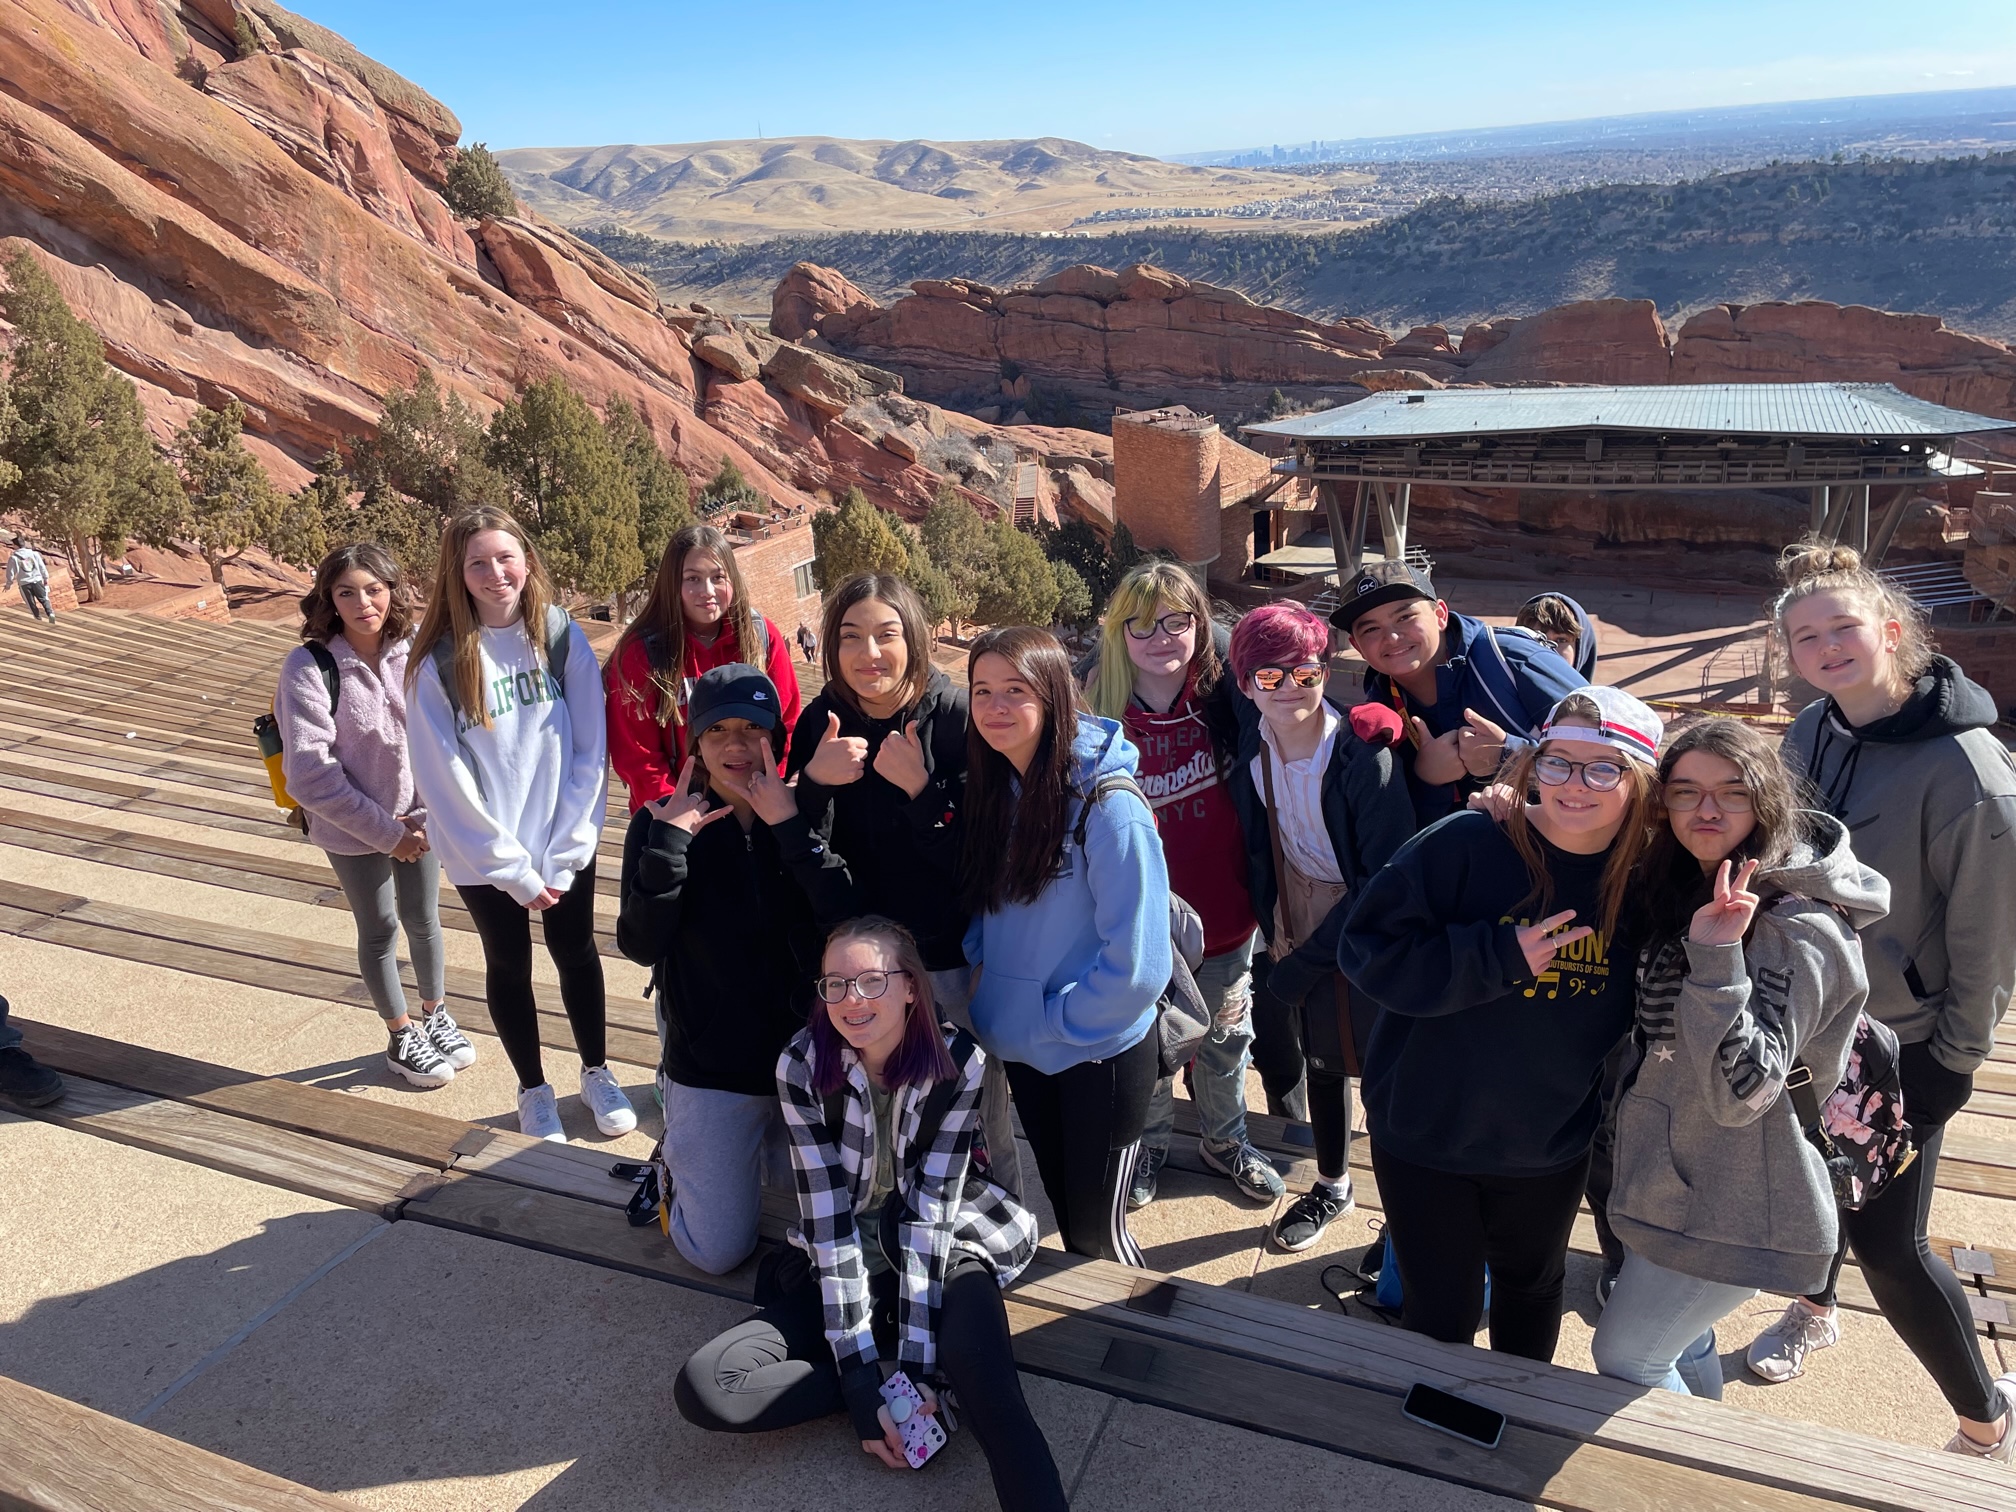 Students visiting Red Rocks park!